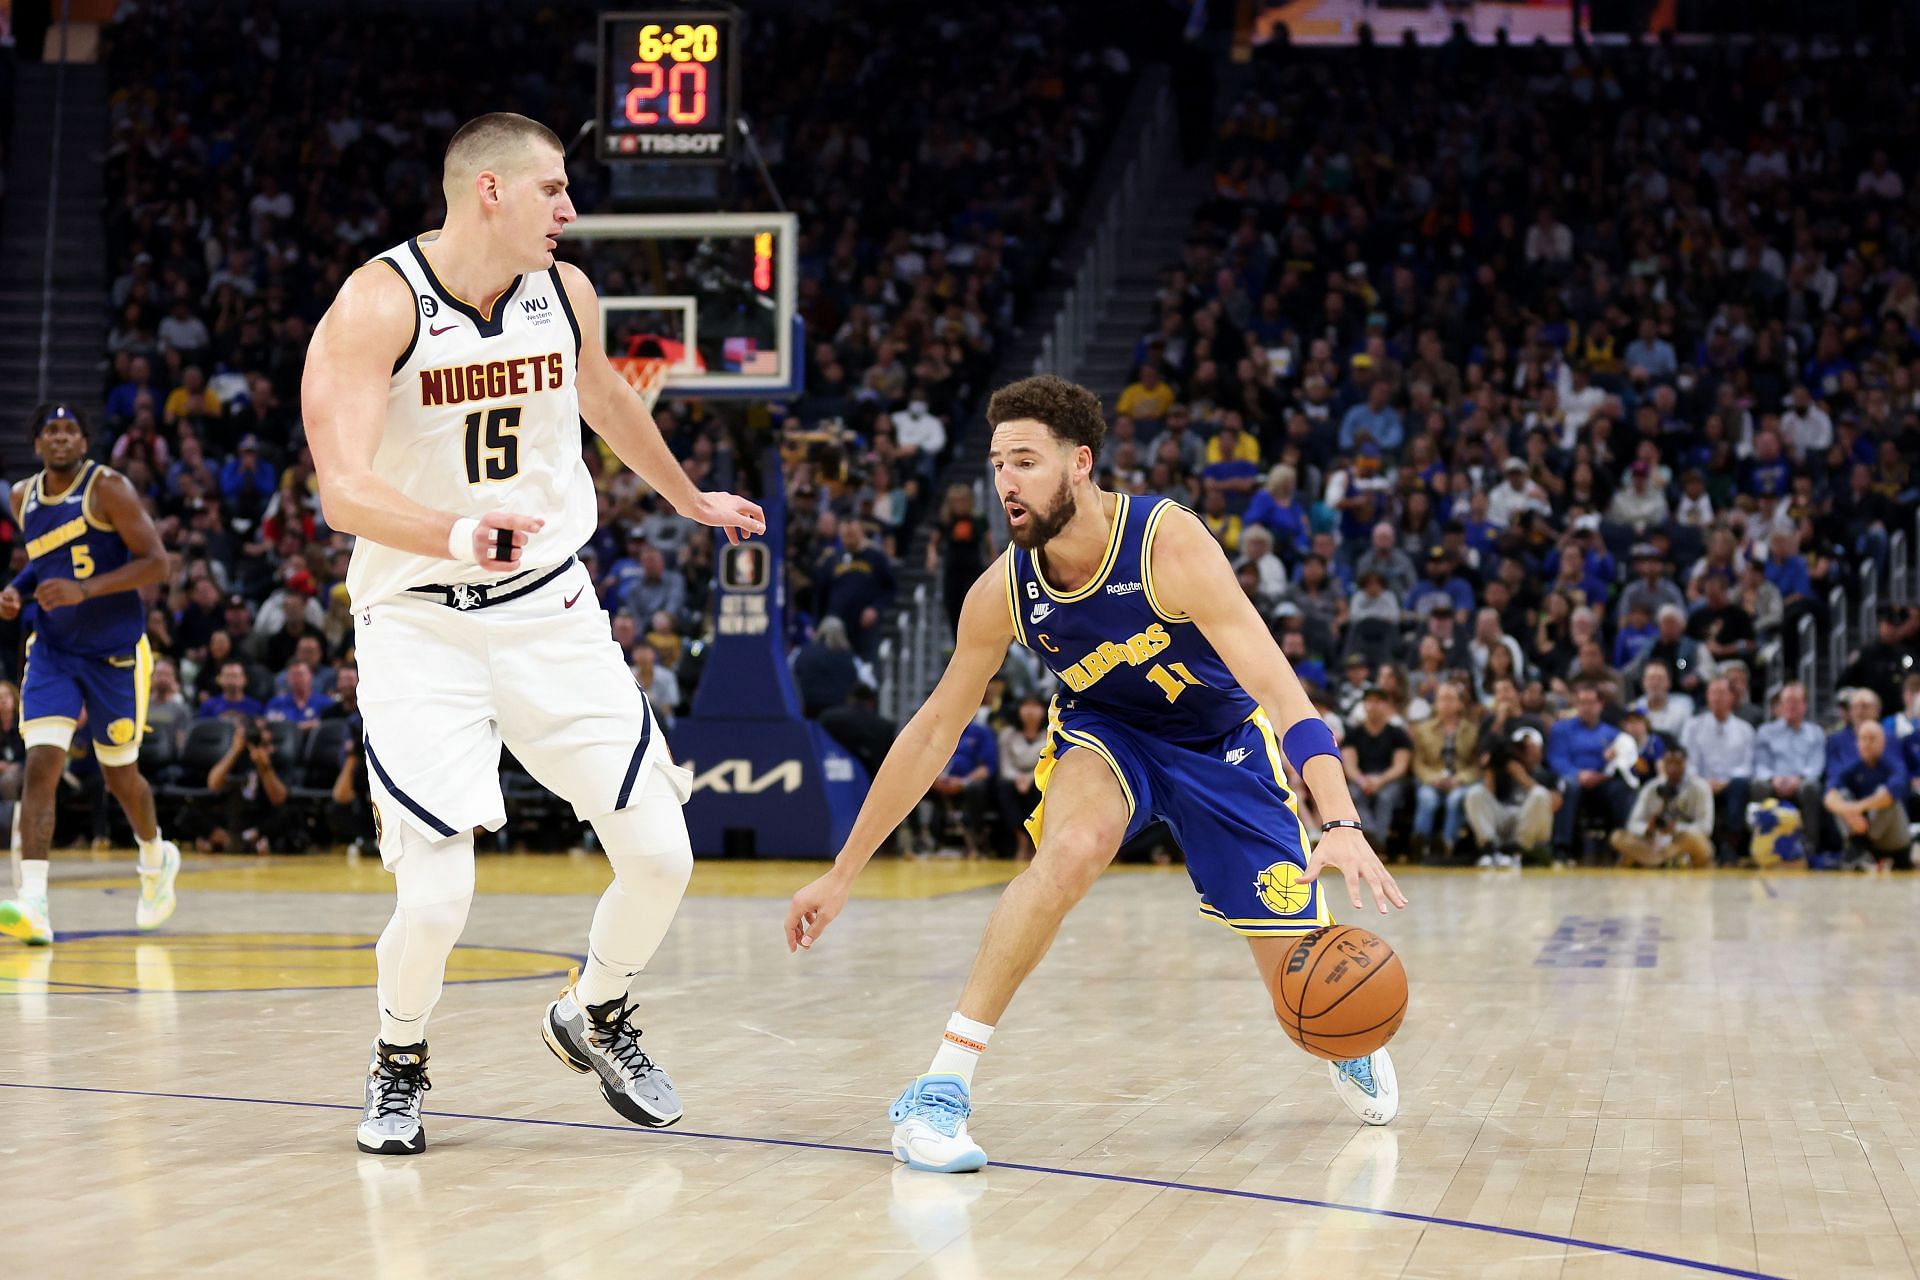 Denver Nuggets superstar center Nikola Jokic and Golden State Warriors star shooting guard Klay Thompson